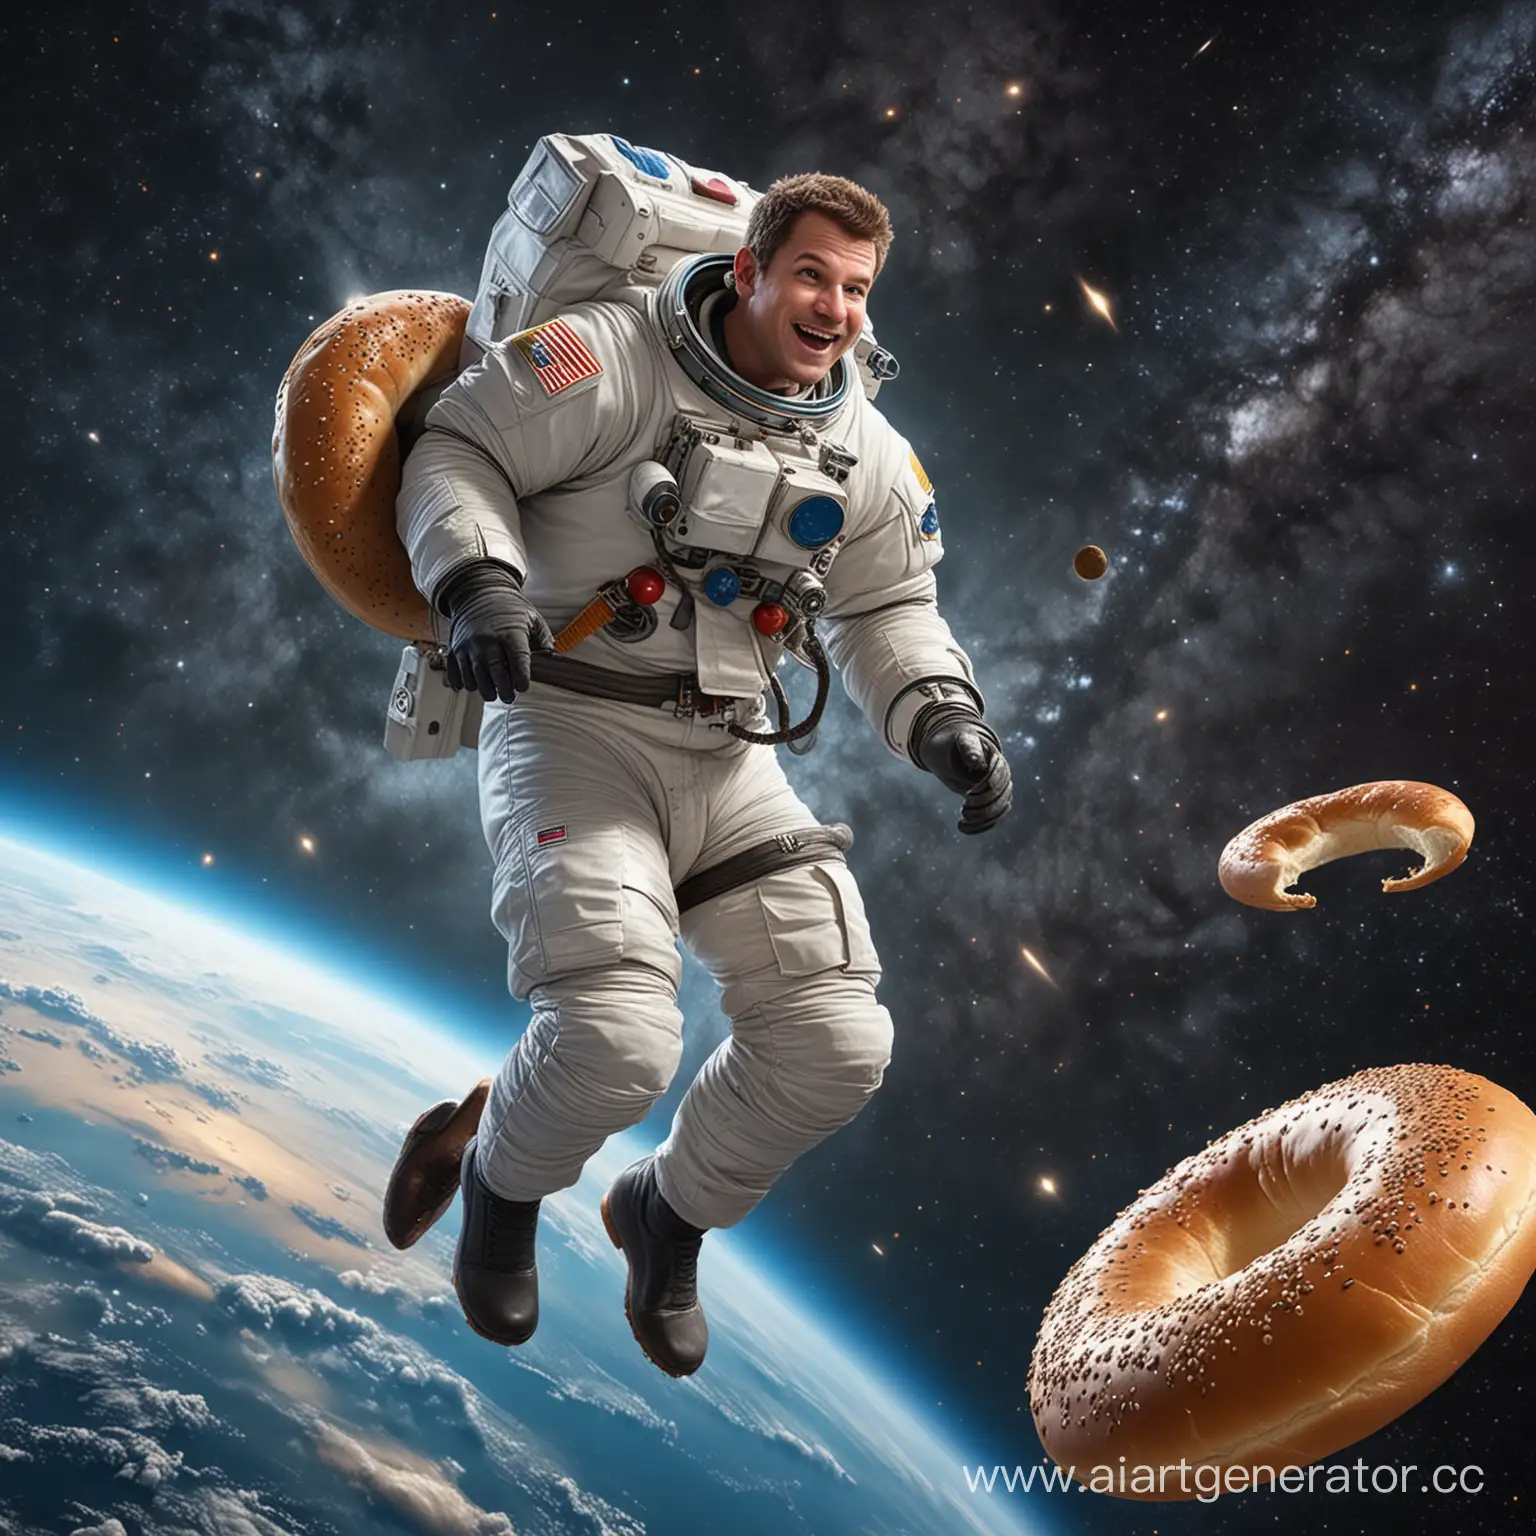 BagelMan-Jumping-in-Space-Vibrant-Cosmic-Adventure-Artwork